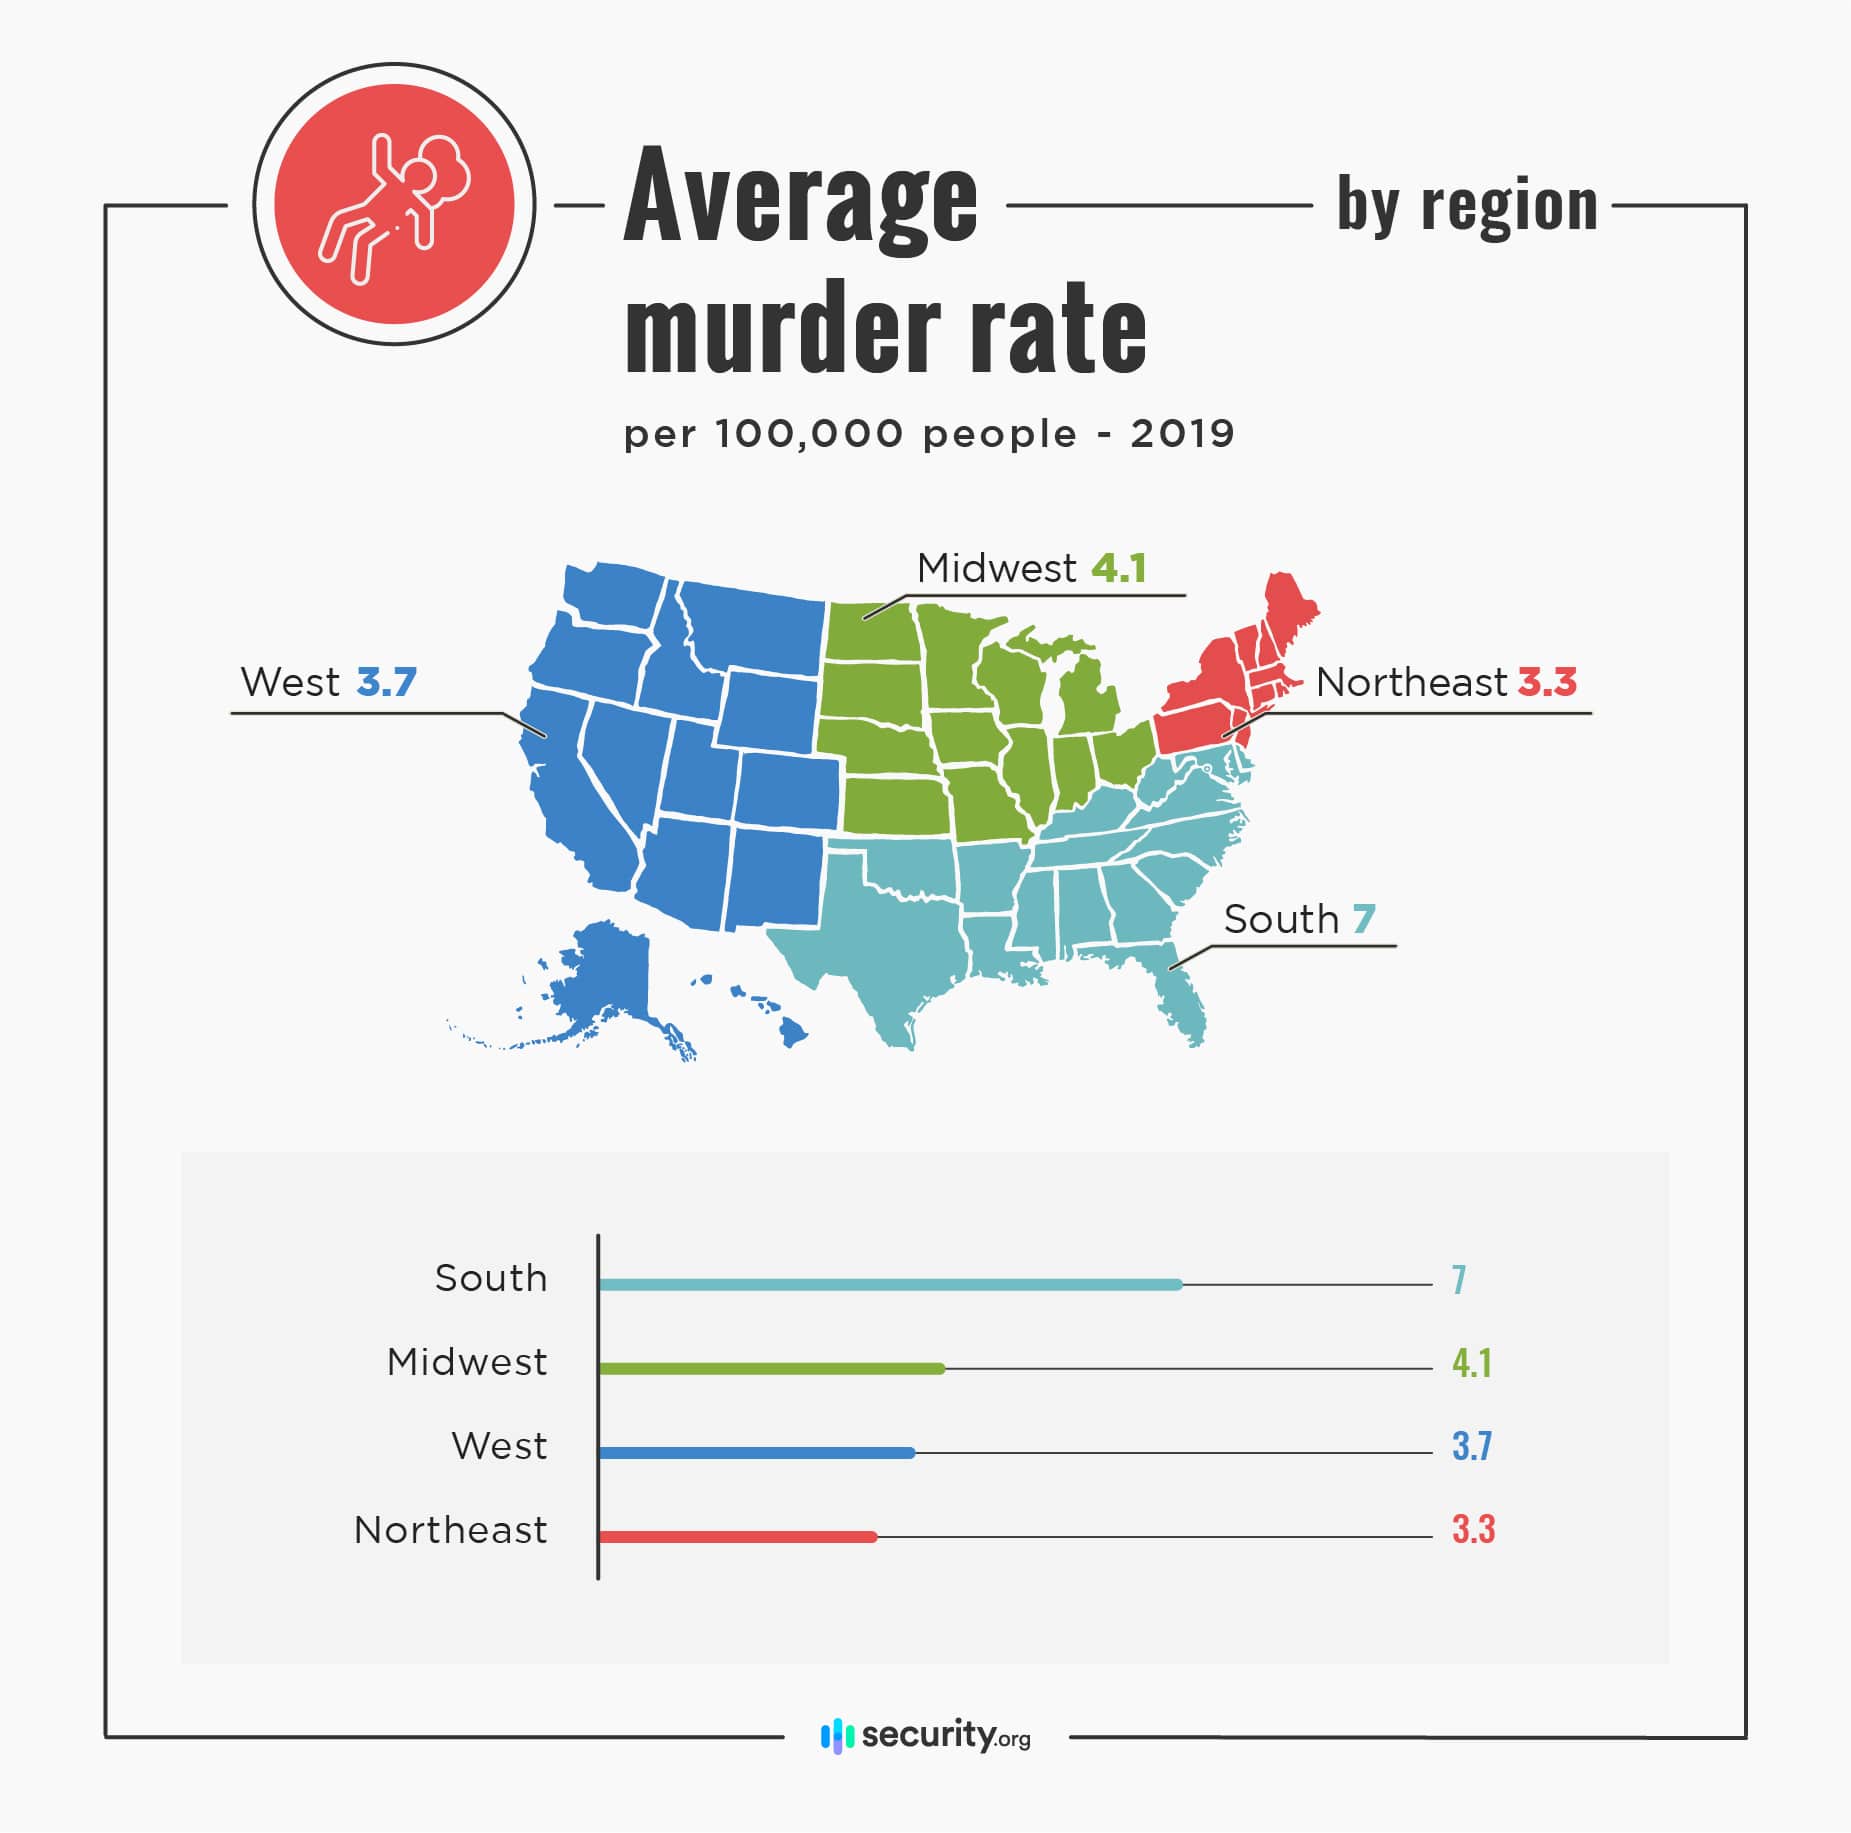 Average murder rate per 100k people by region in 2019